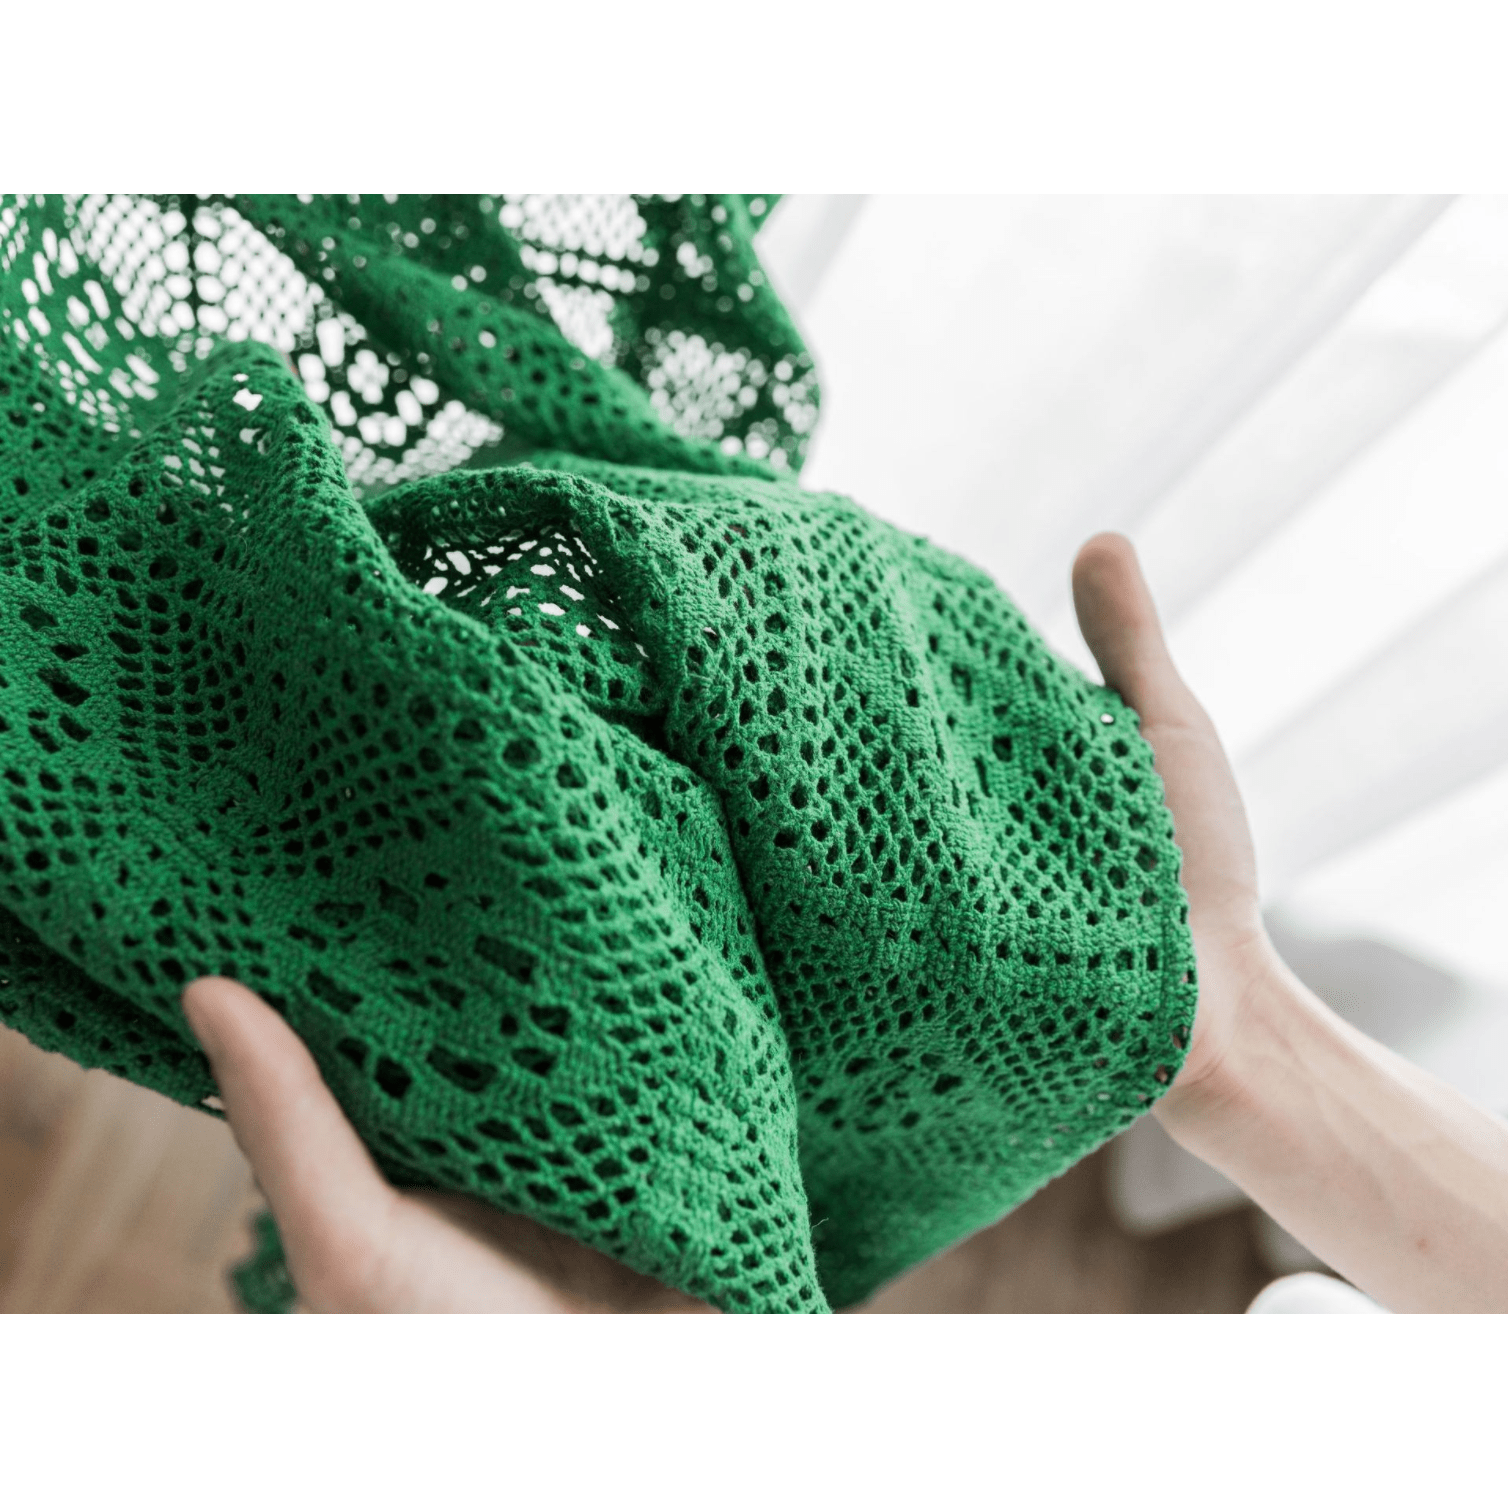 Rémy Crochet Sheer Curtains - Green / Pink